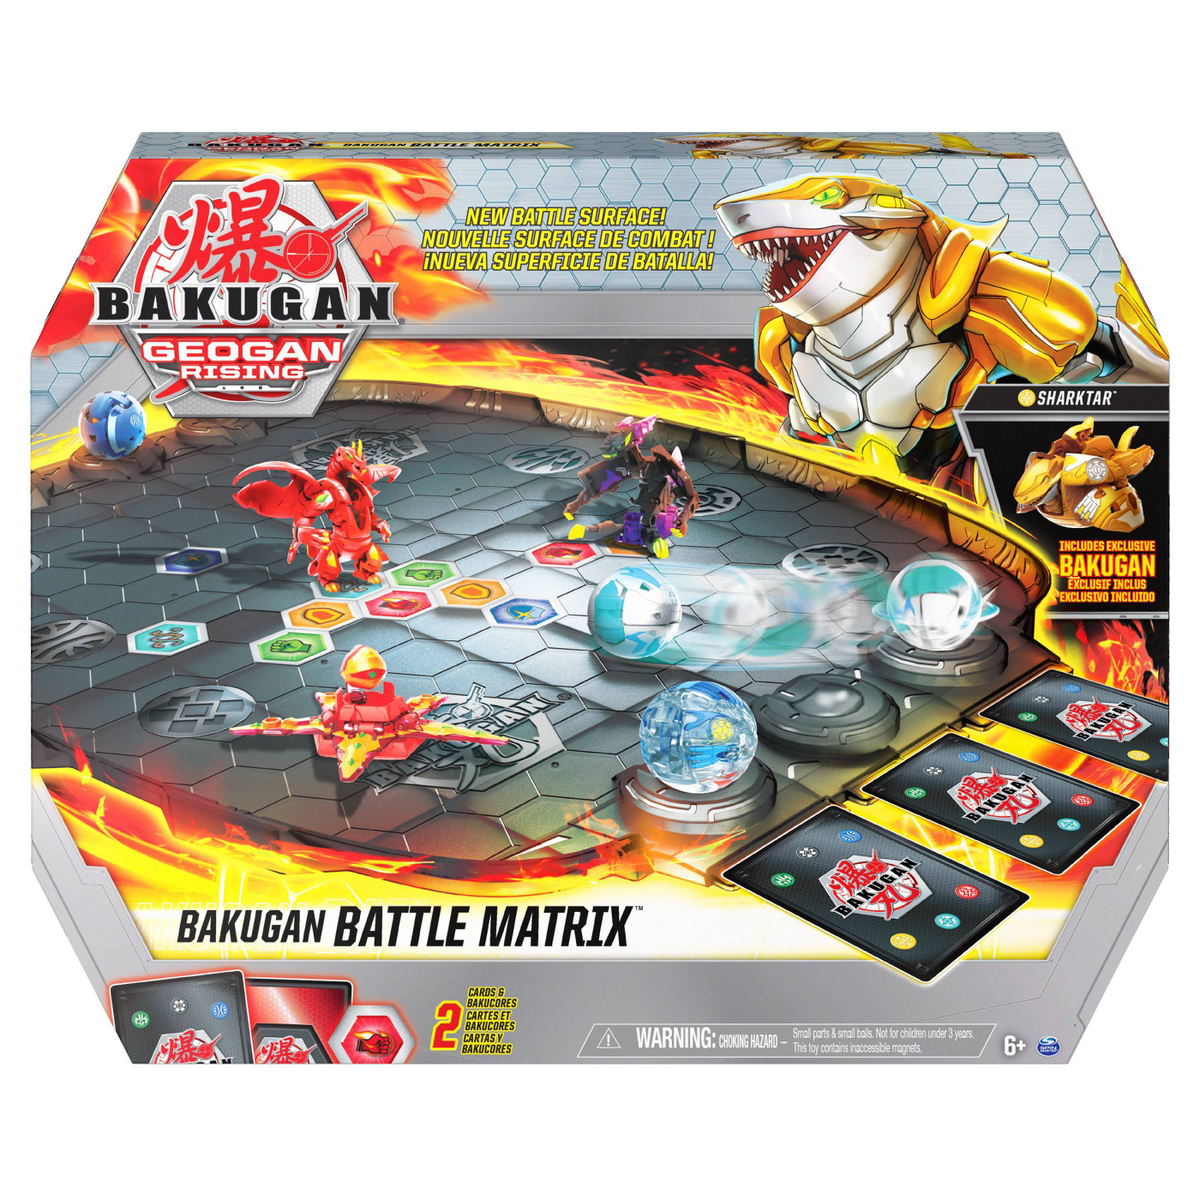 Bakugan Battle Matrix - The Bakugan Wiki